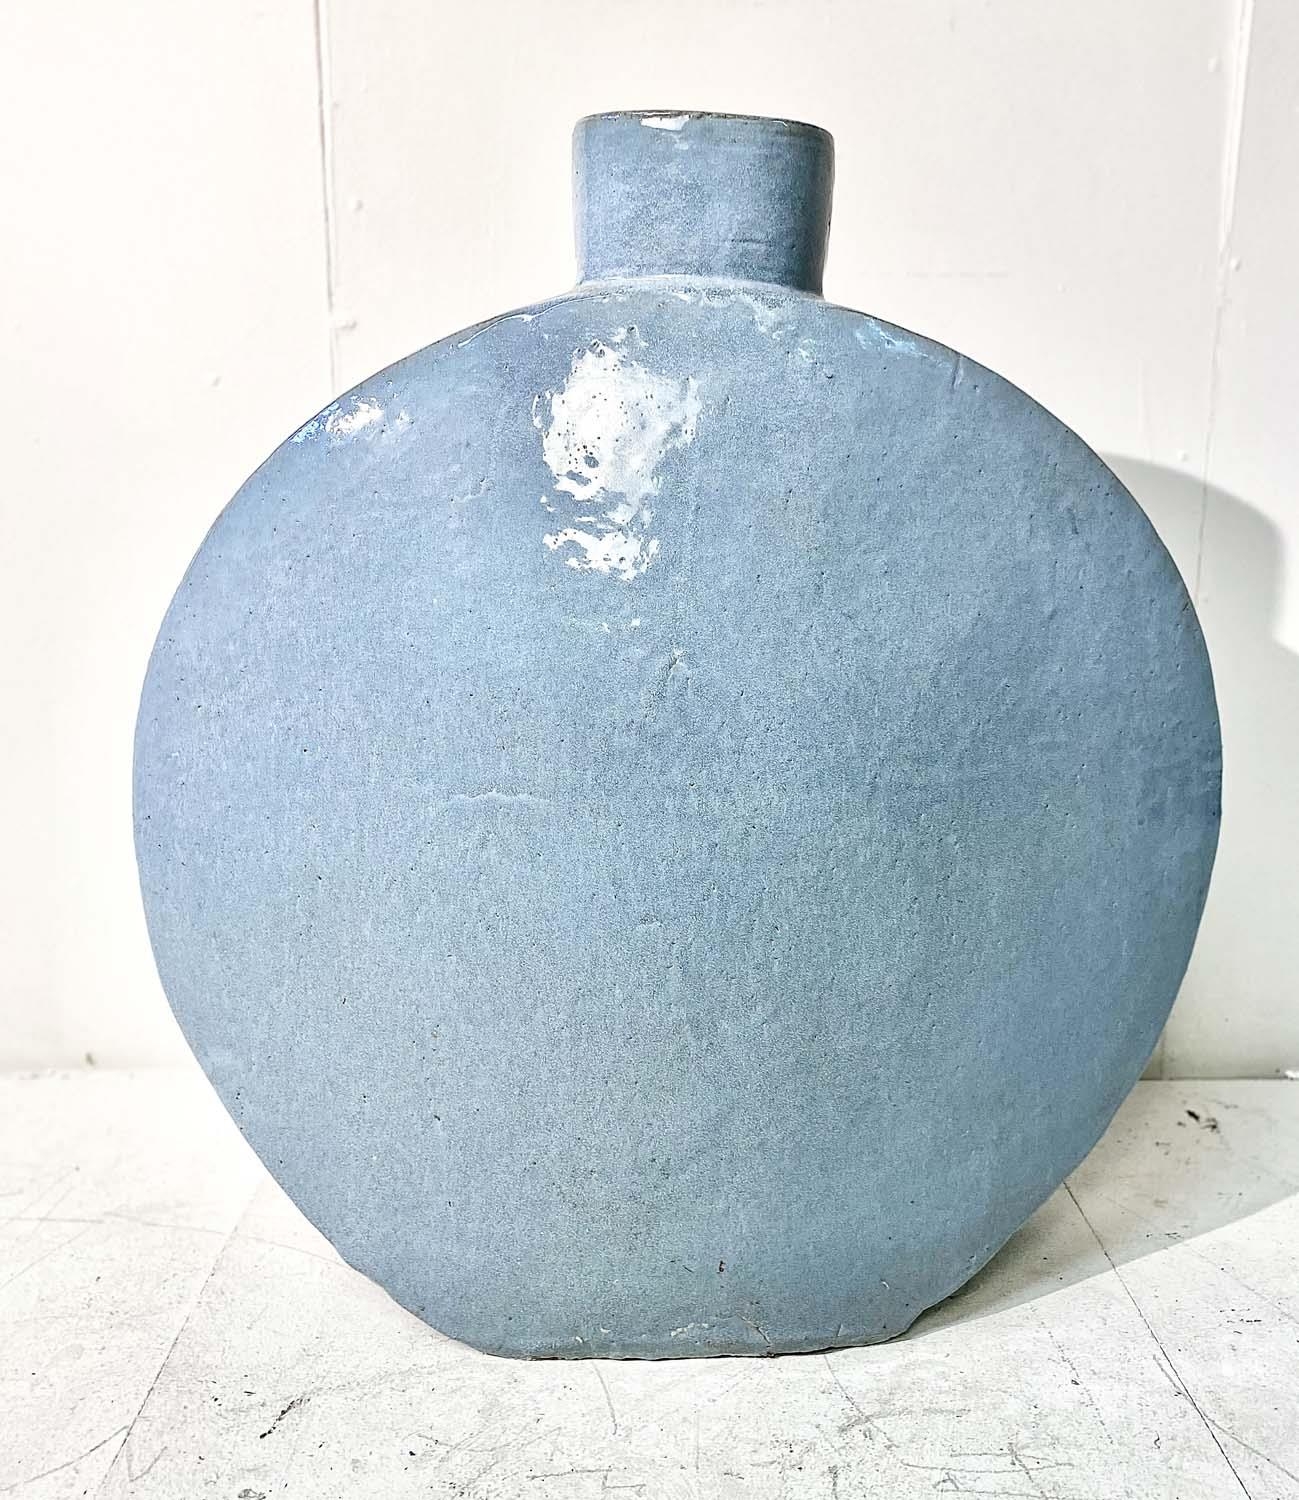 CHINESE STYLE MOON VASE, light blue glazed ceramic, 72cm H x 70cm W